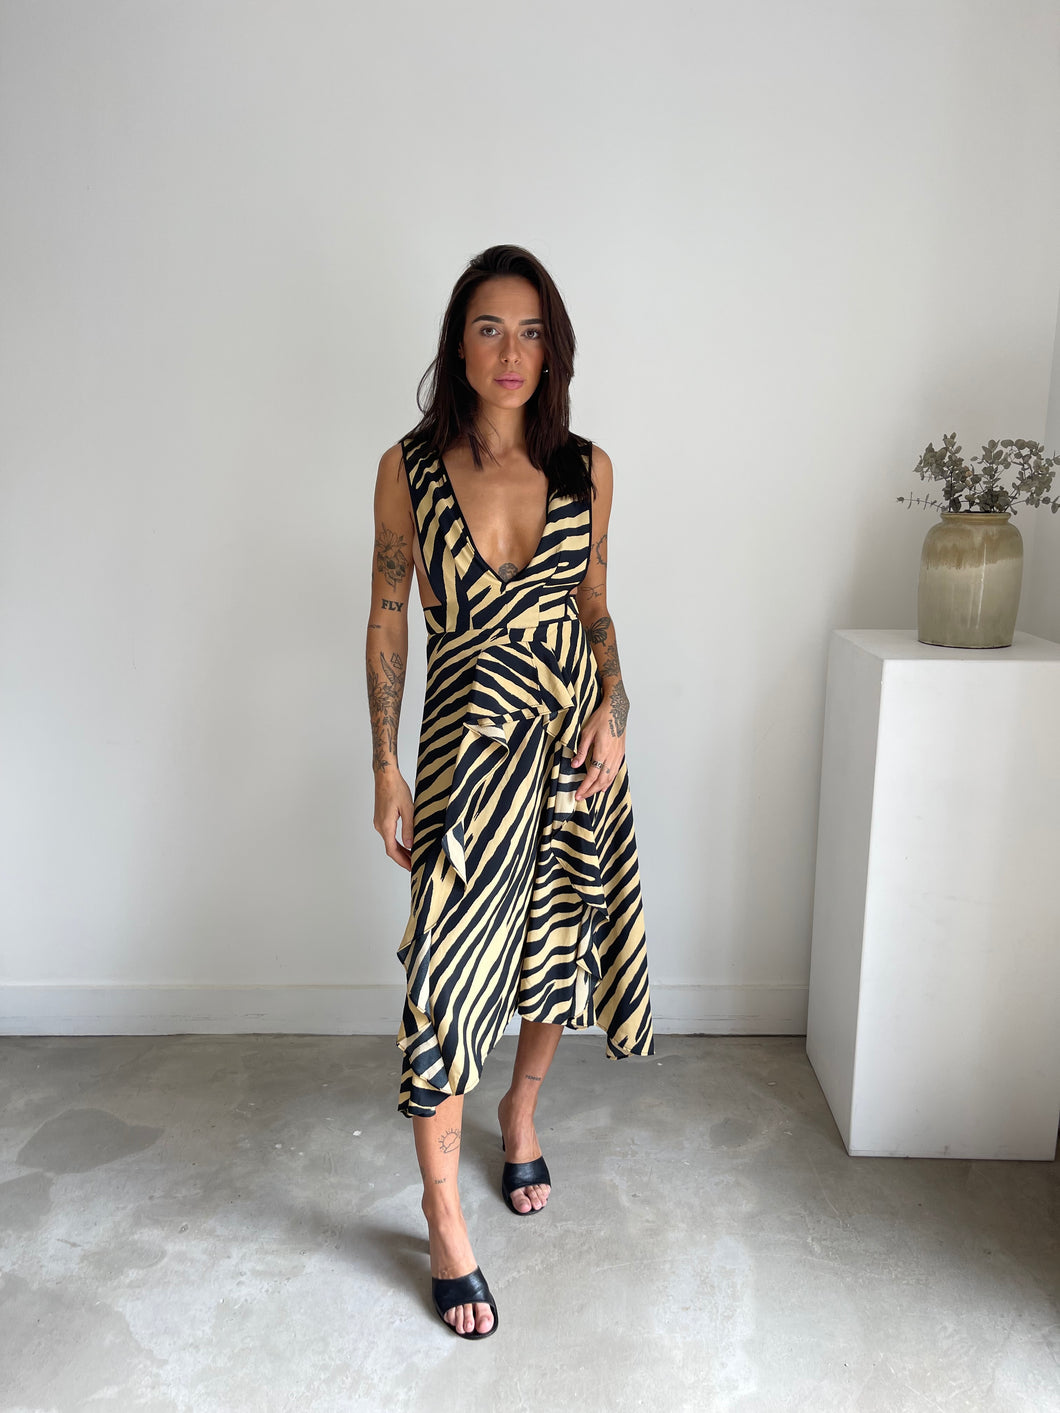 Topshop Zebra Print Dress